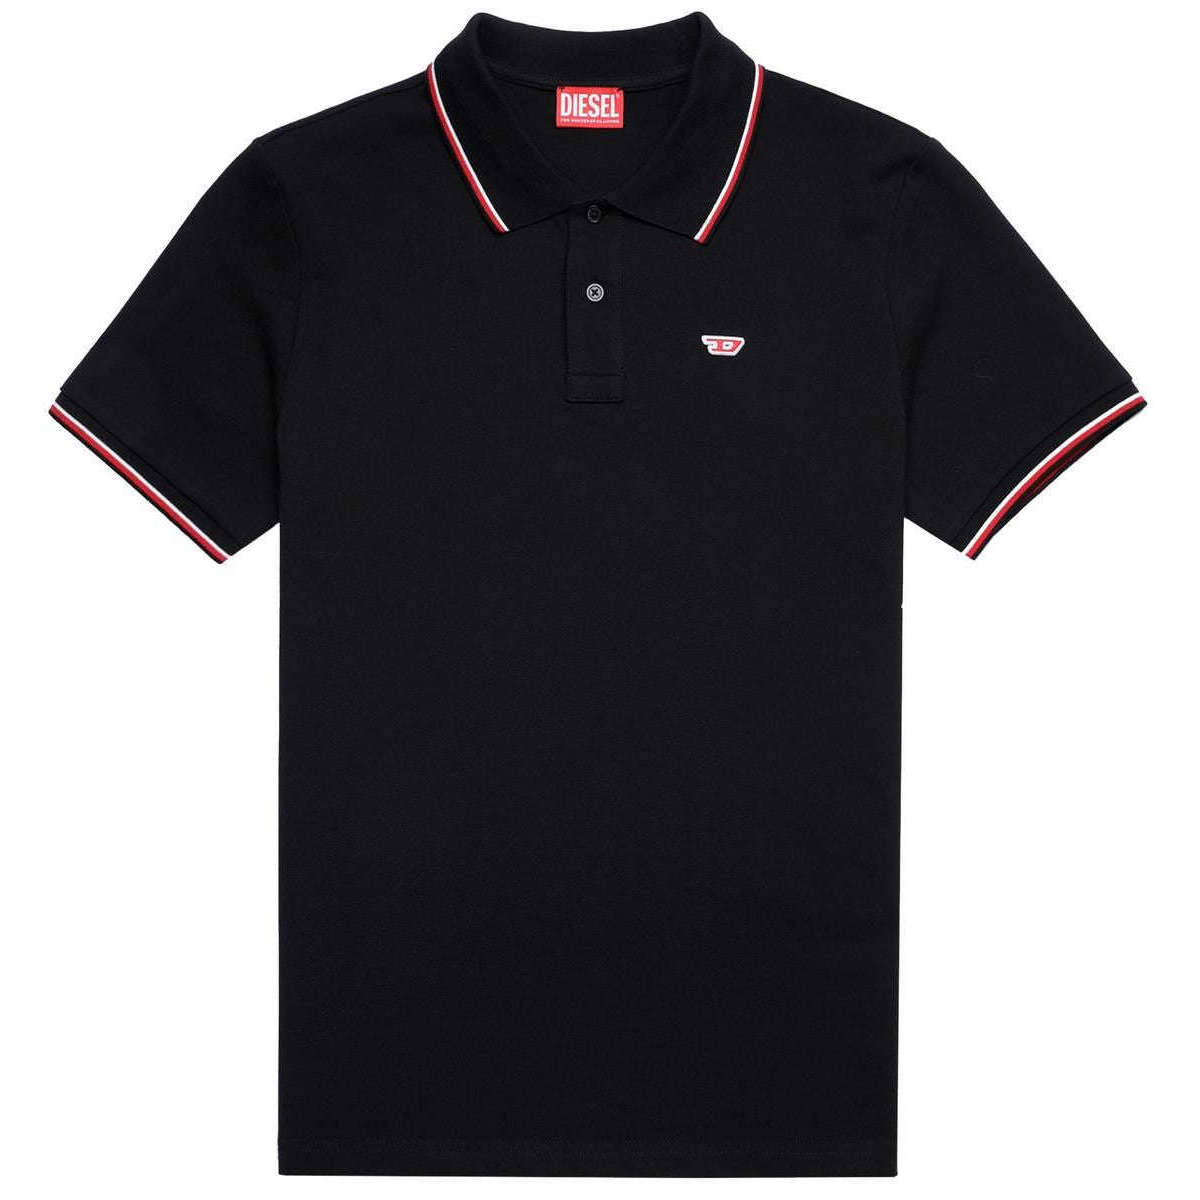 Diesel Smith D Logo Polo Shirt - Black/Red